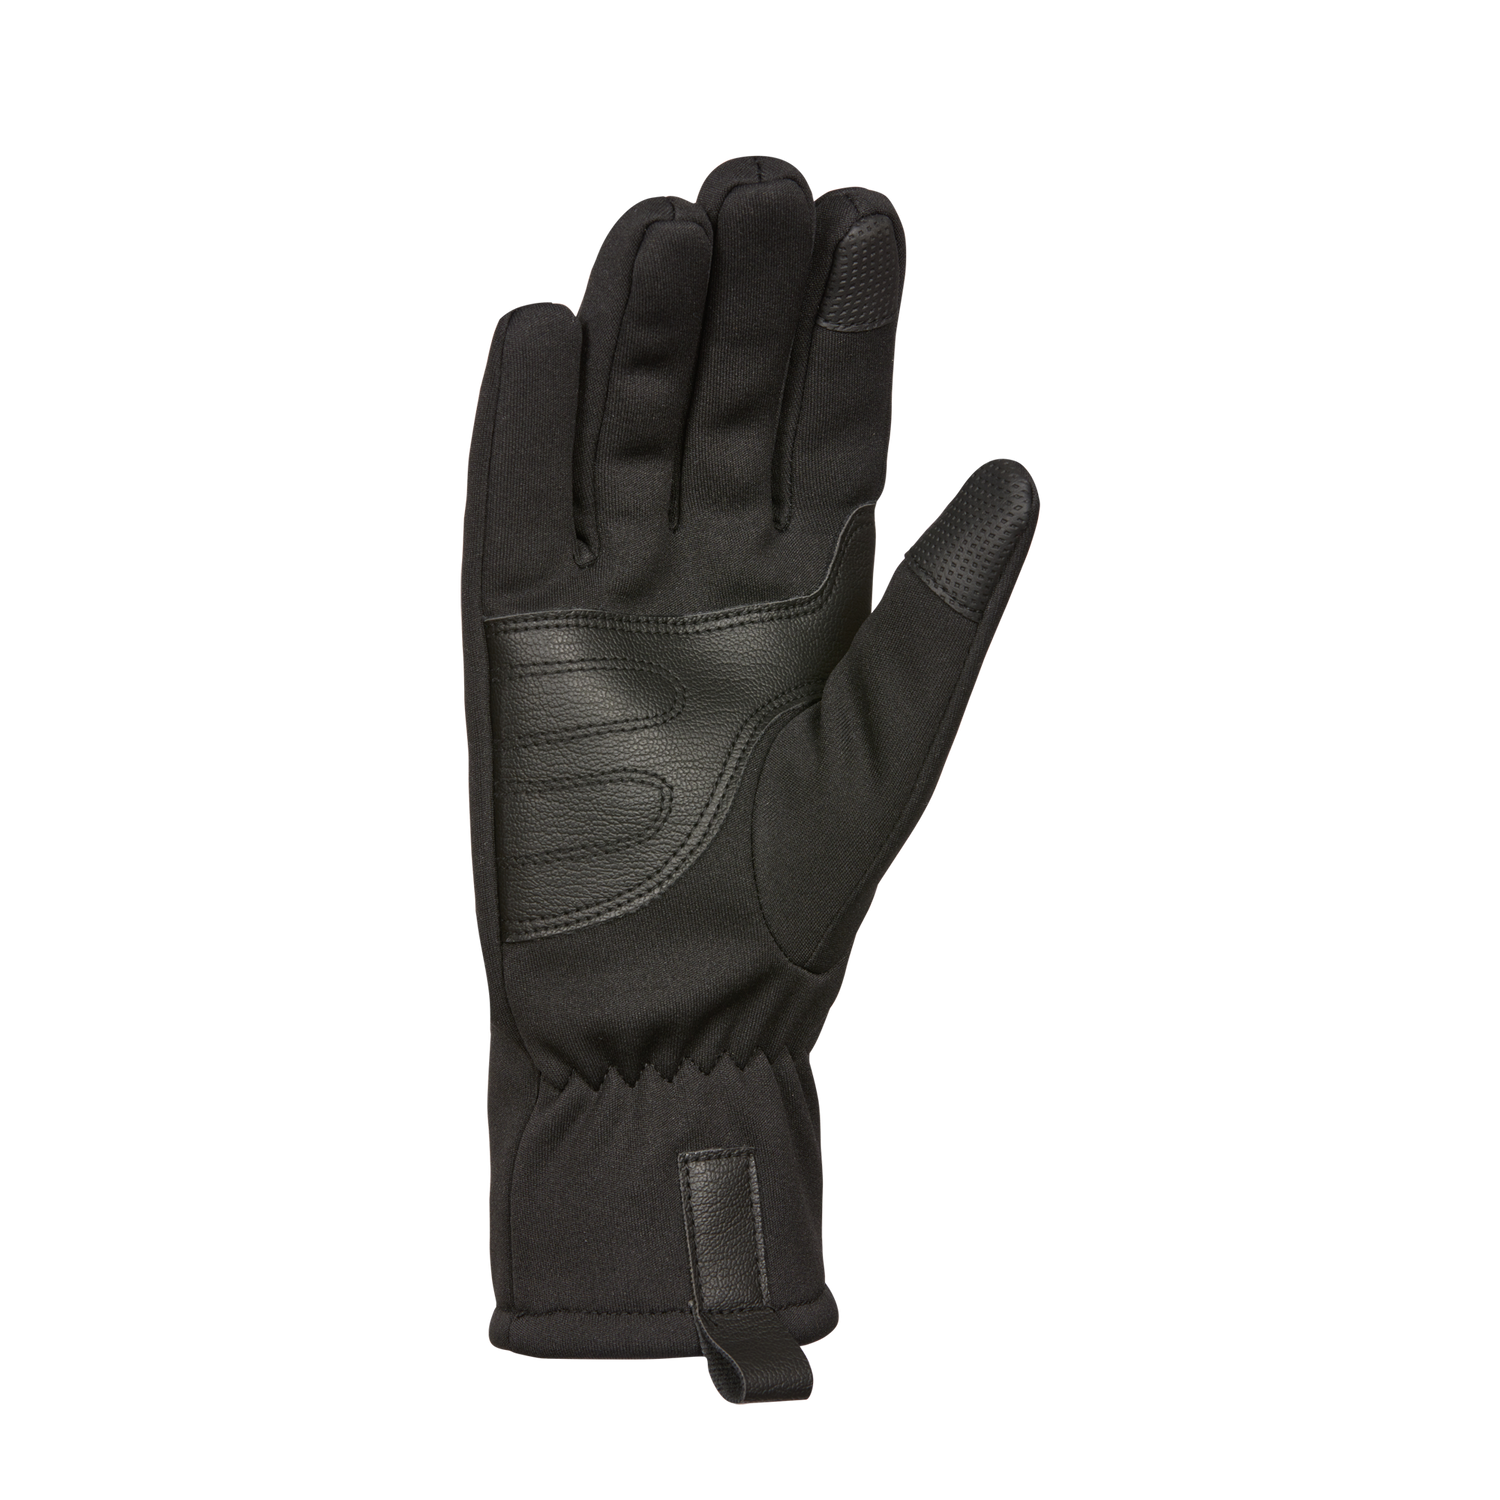 KOMBI - Sprint Ladies Glove